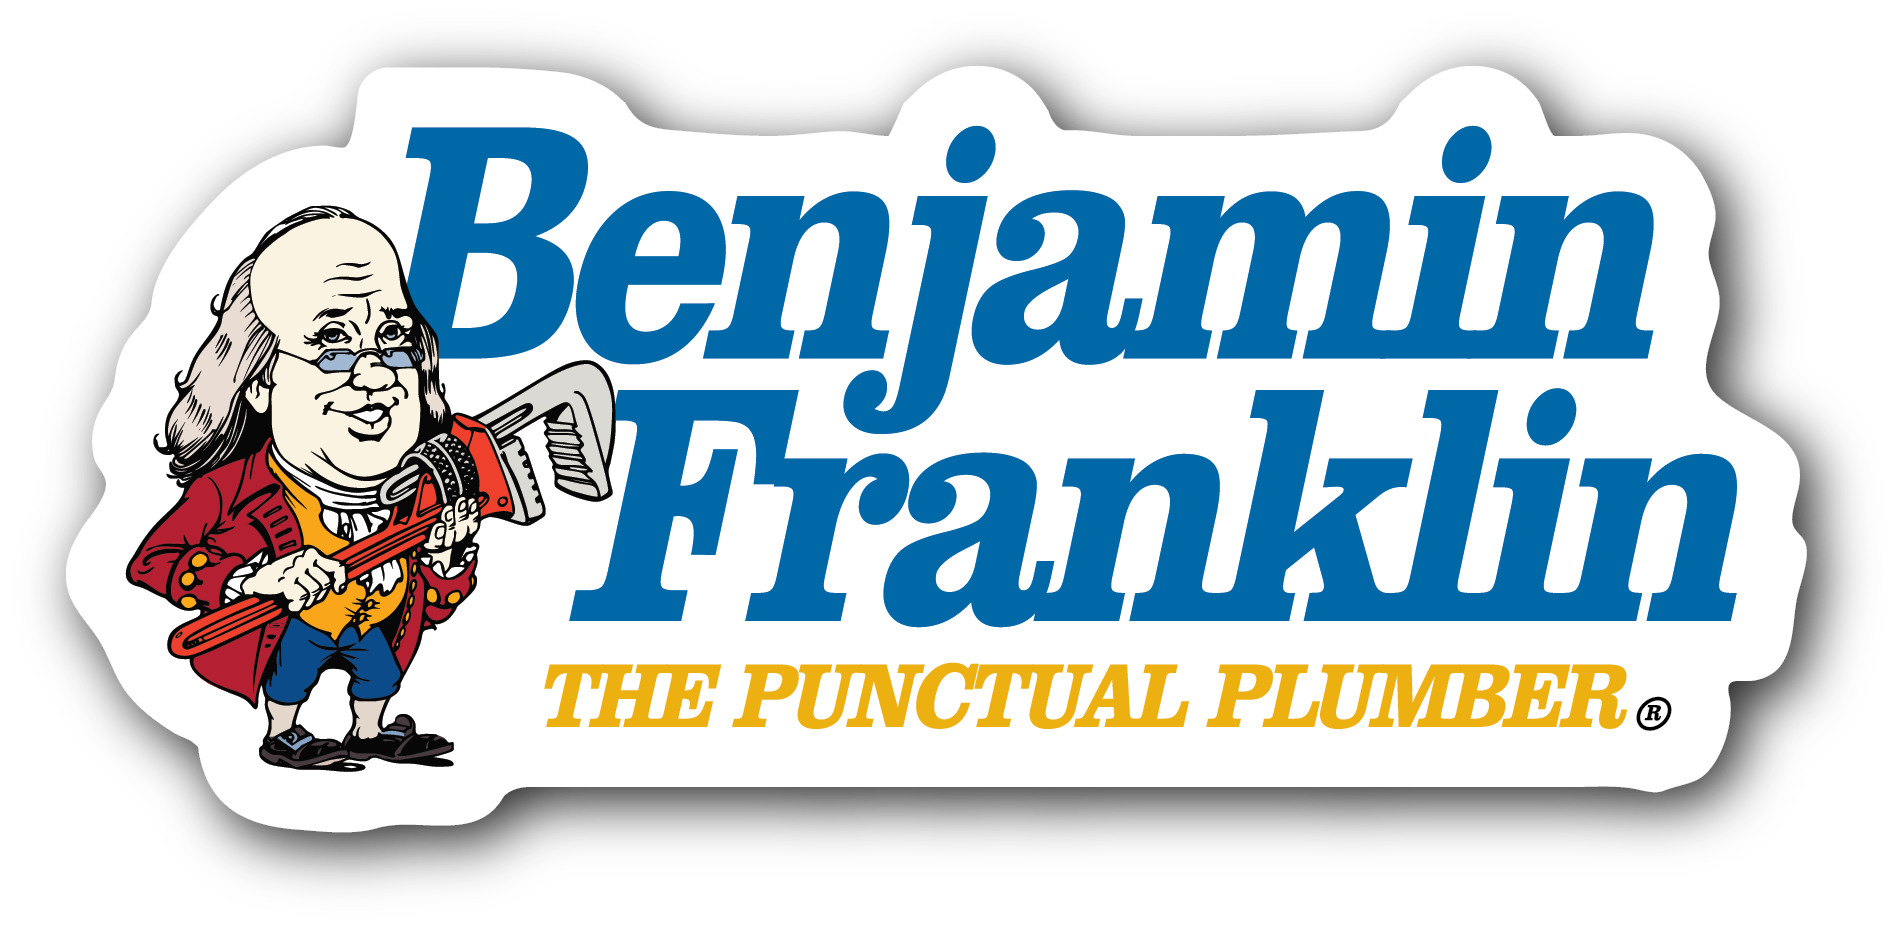 Ben Franklin stroke